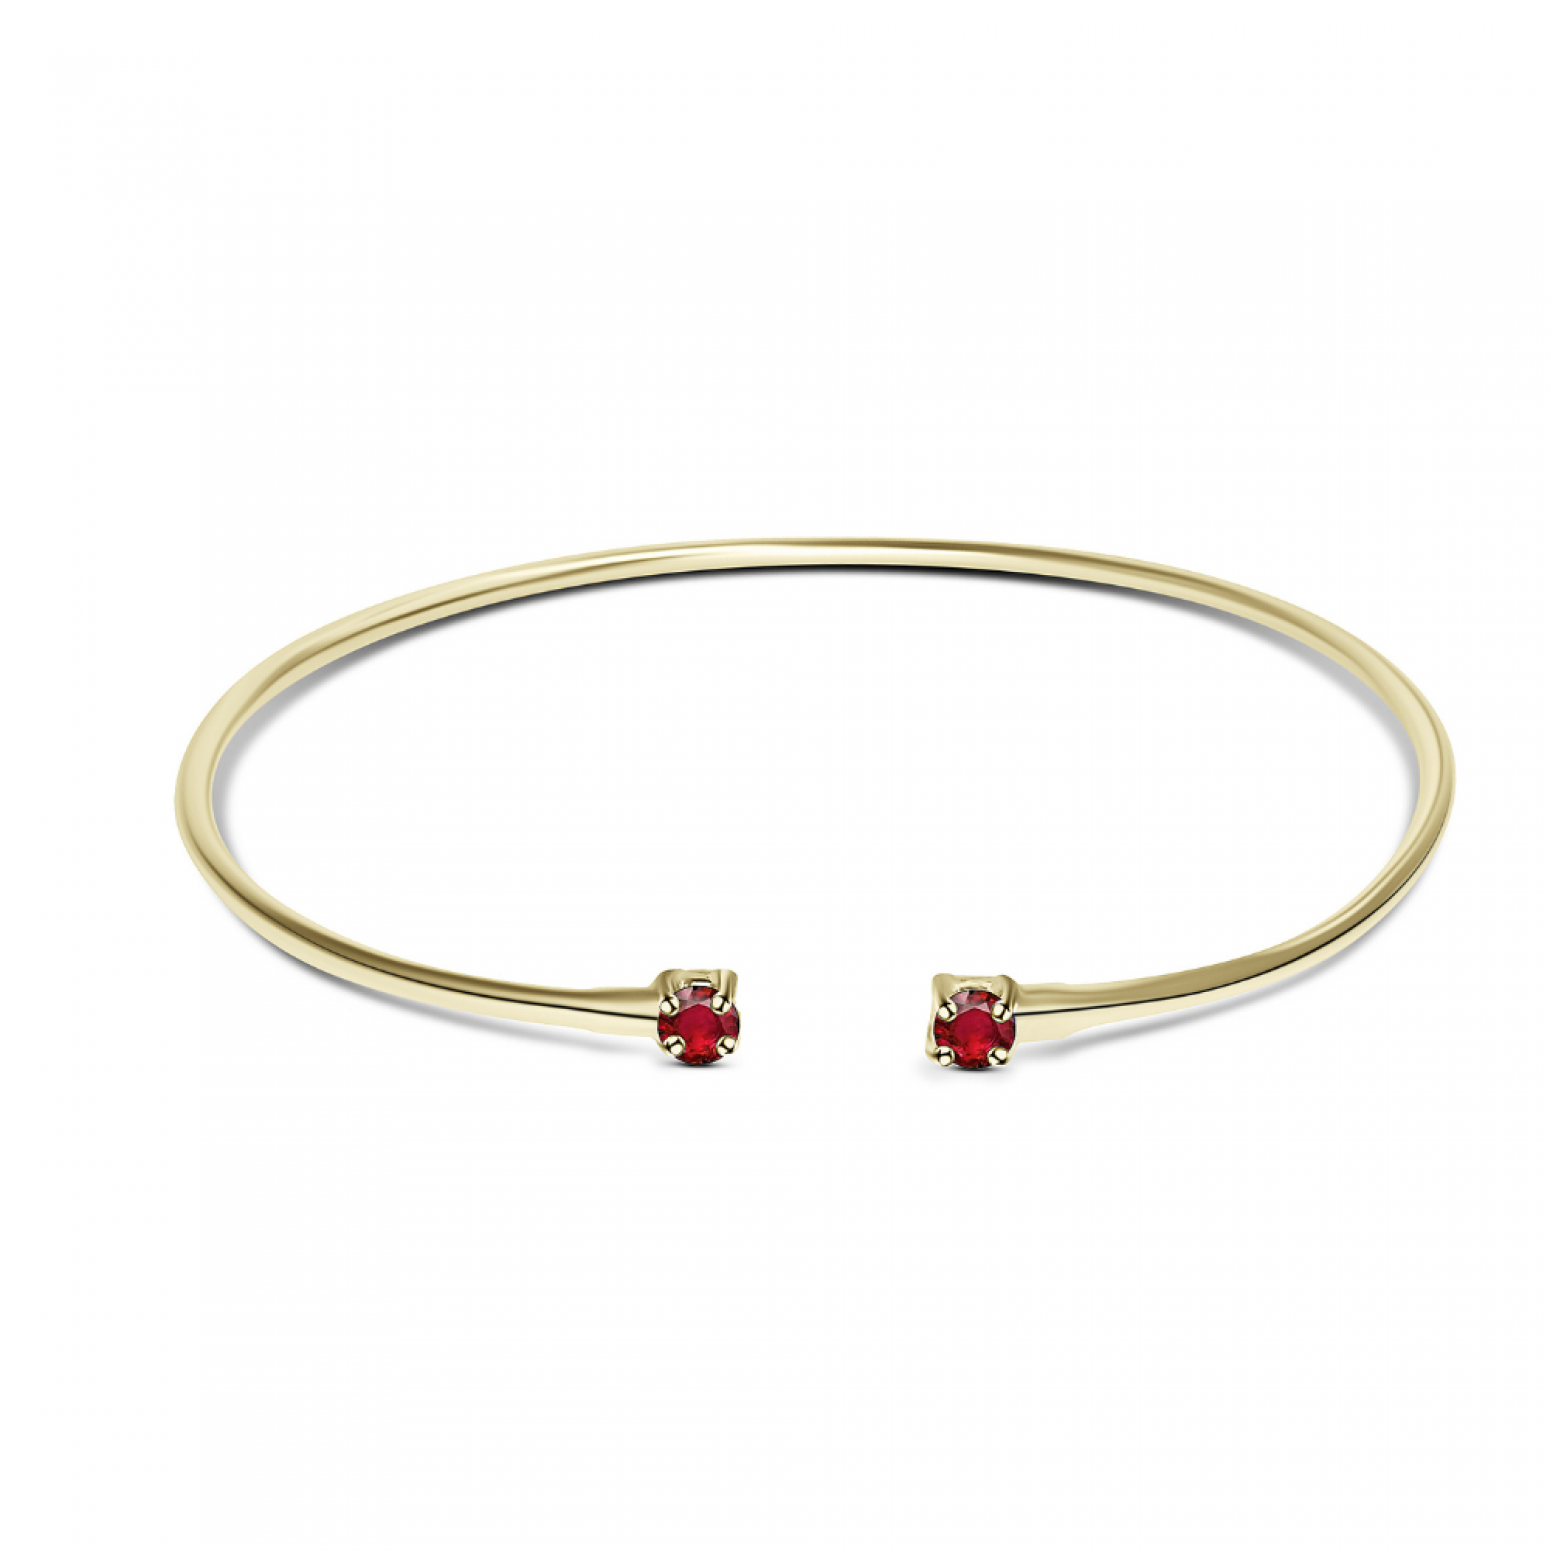 Bracelet handcuffs, Κ14 gold with rubies 0.17ct, br3033 BRACELETS Κοσμηματα - chrilia.gr